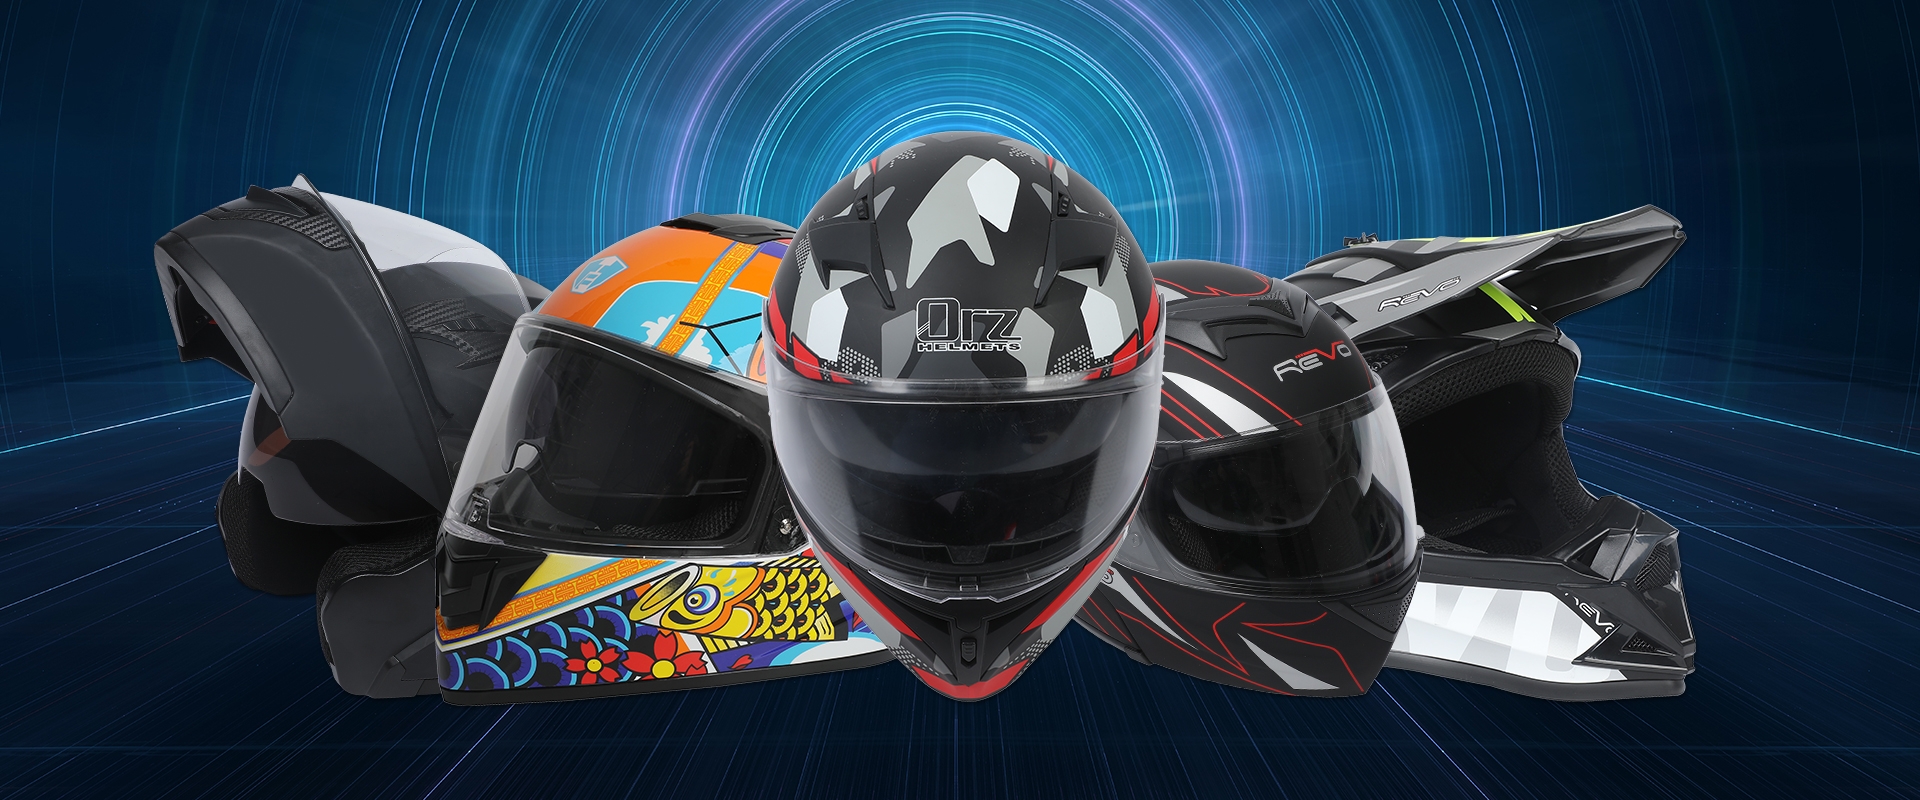 Motocross Helmet, Racing Helmet, Dirt Bike Riding Helmets - KangXing